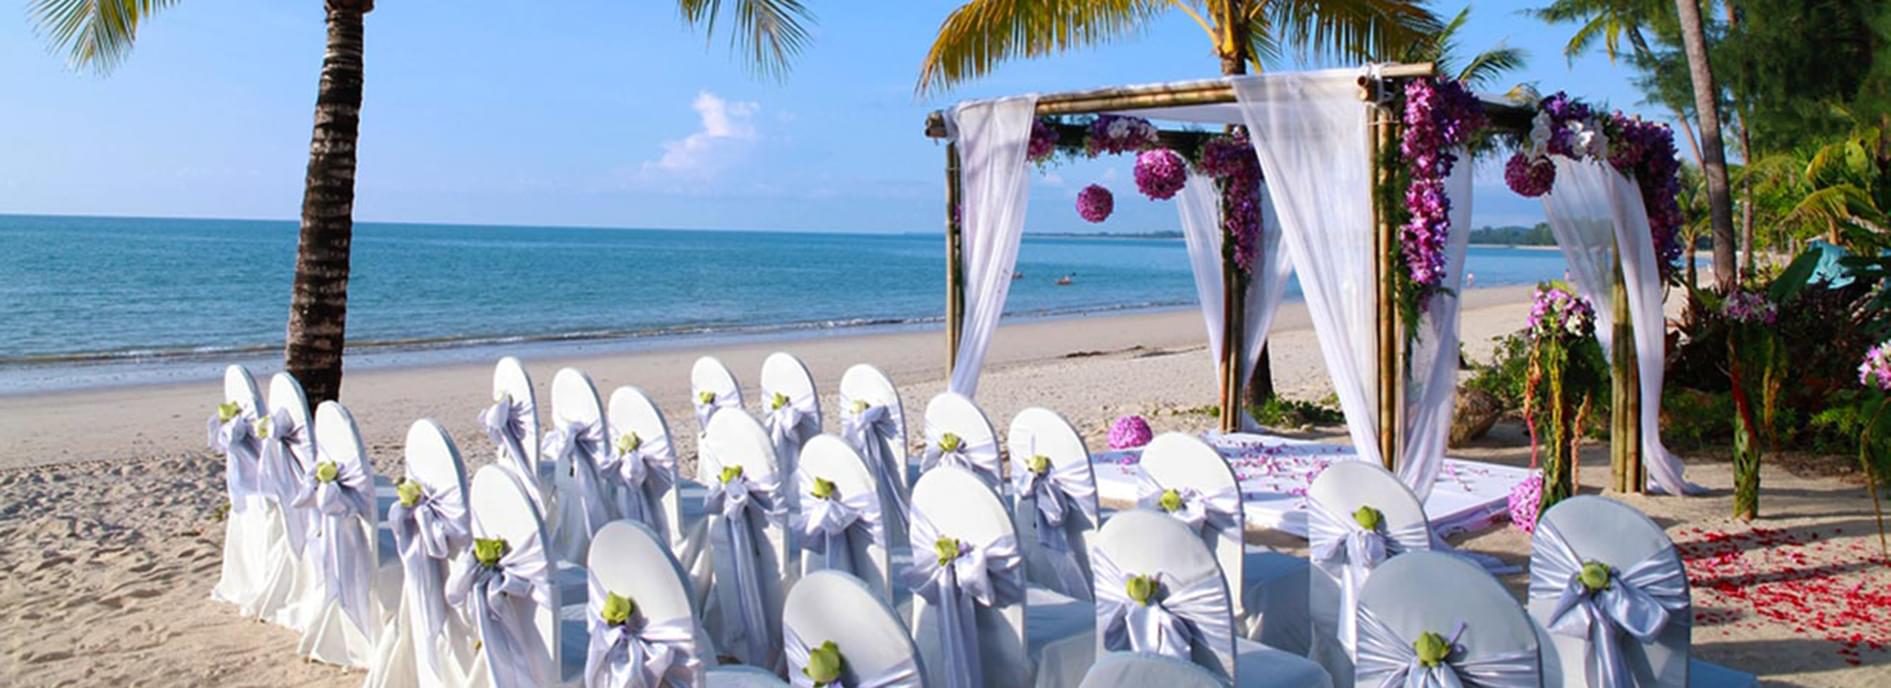 Beach Weddings in Mexico